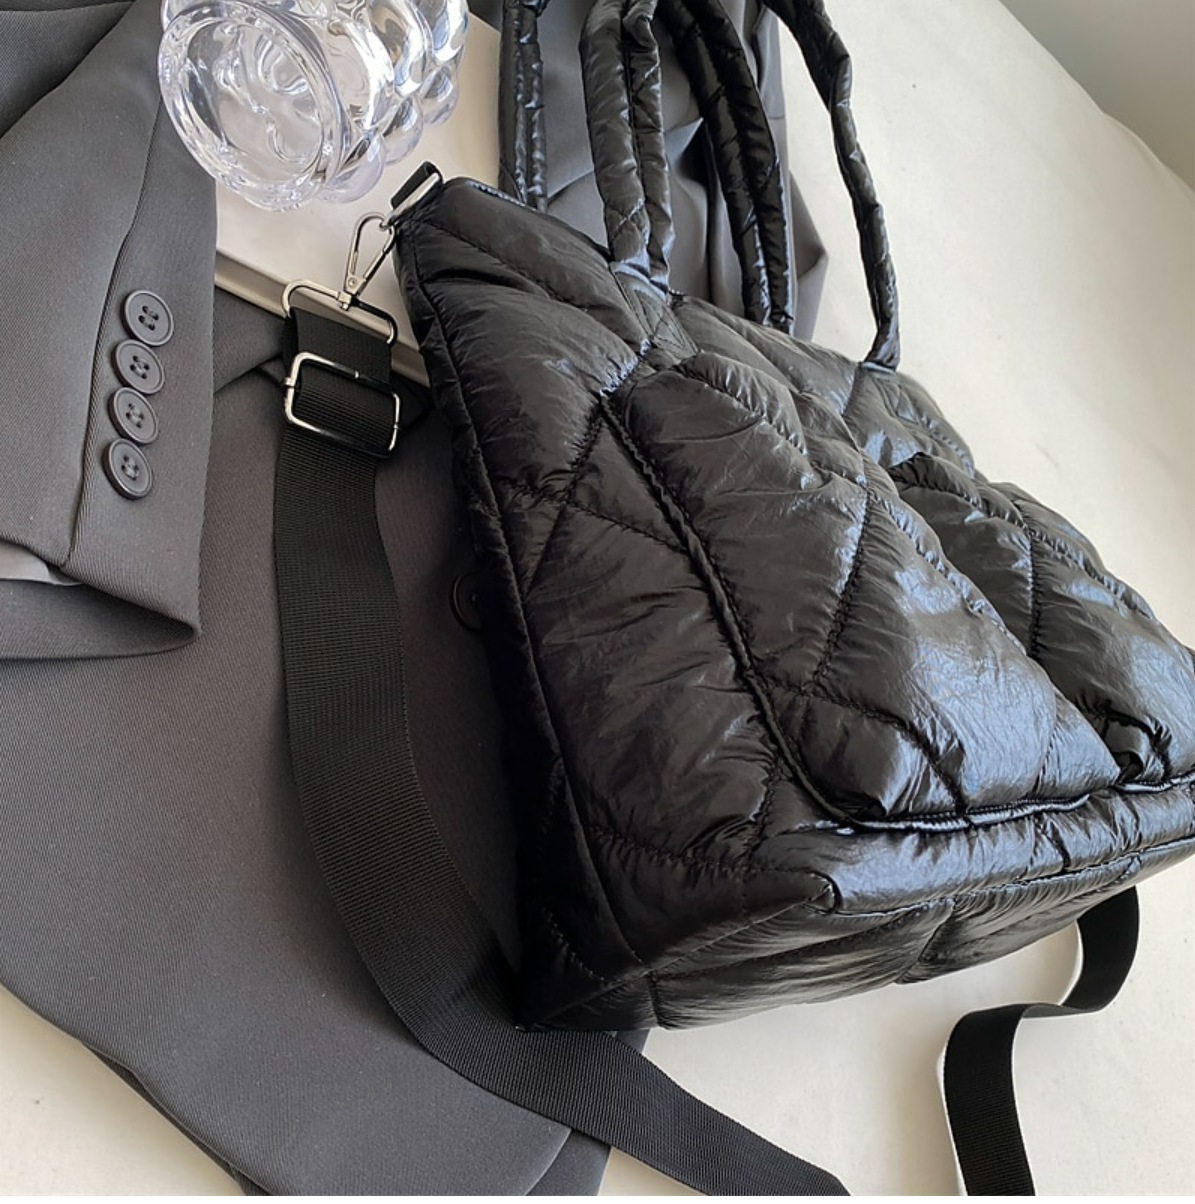 Women's Handbag Synthetic Daily Zipper Large Capacity Foldable Lightweight Geometric Black Silver Purple